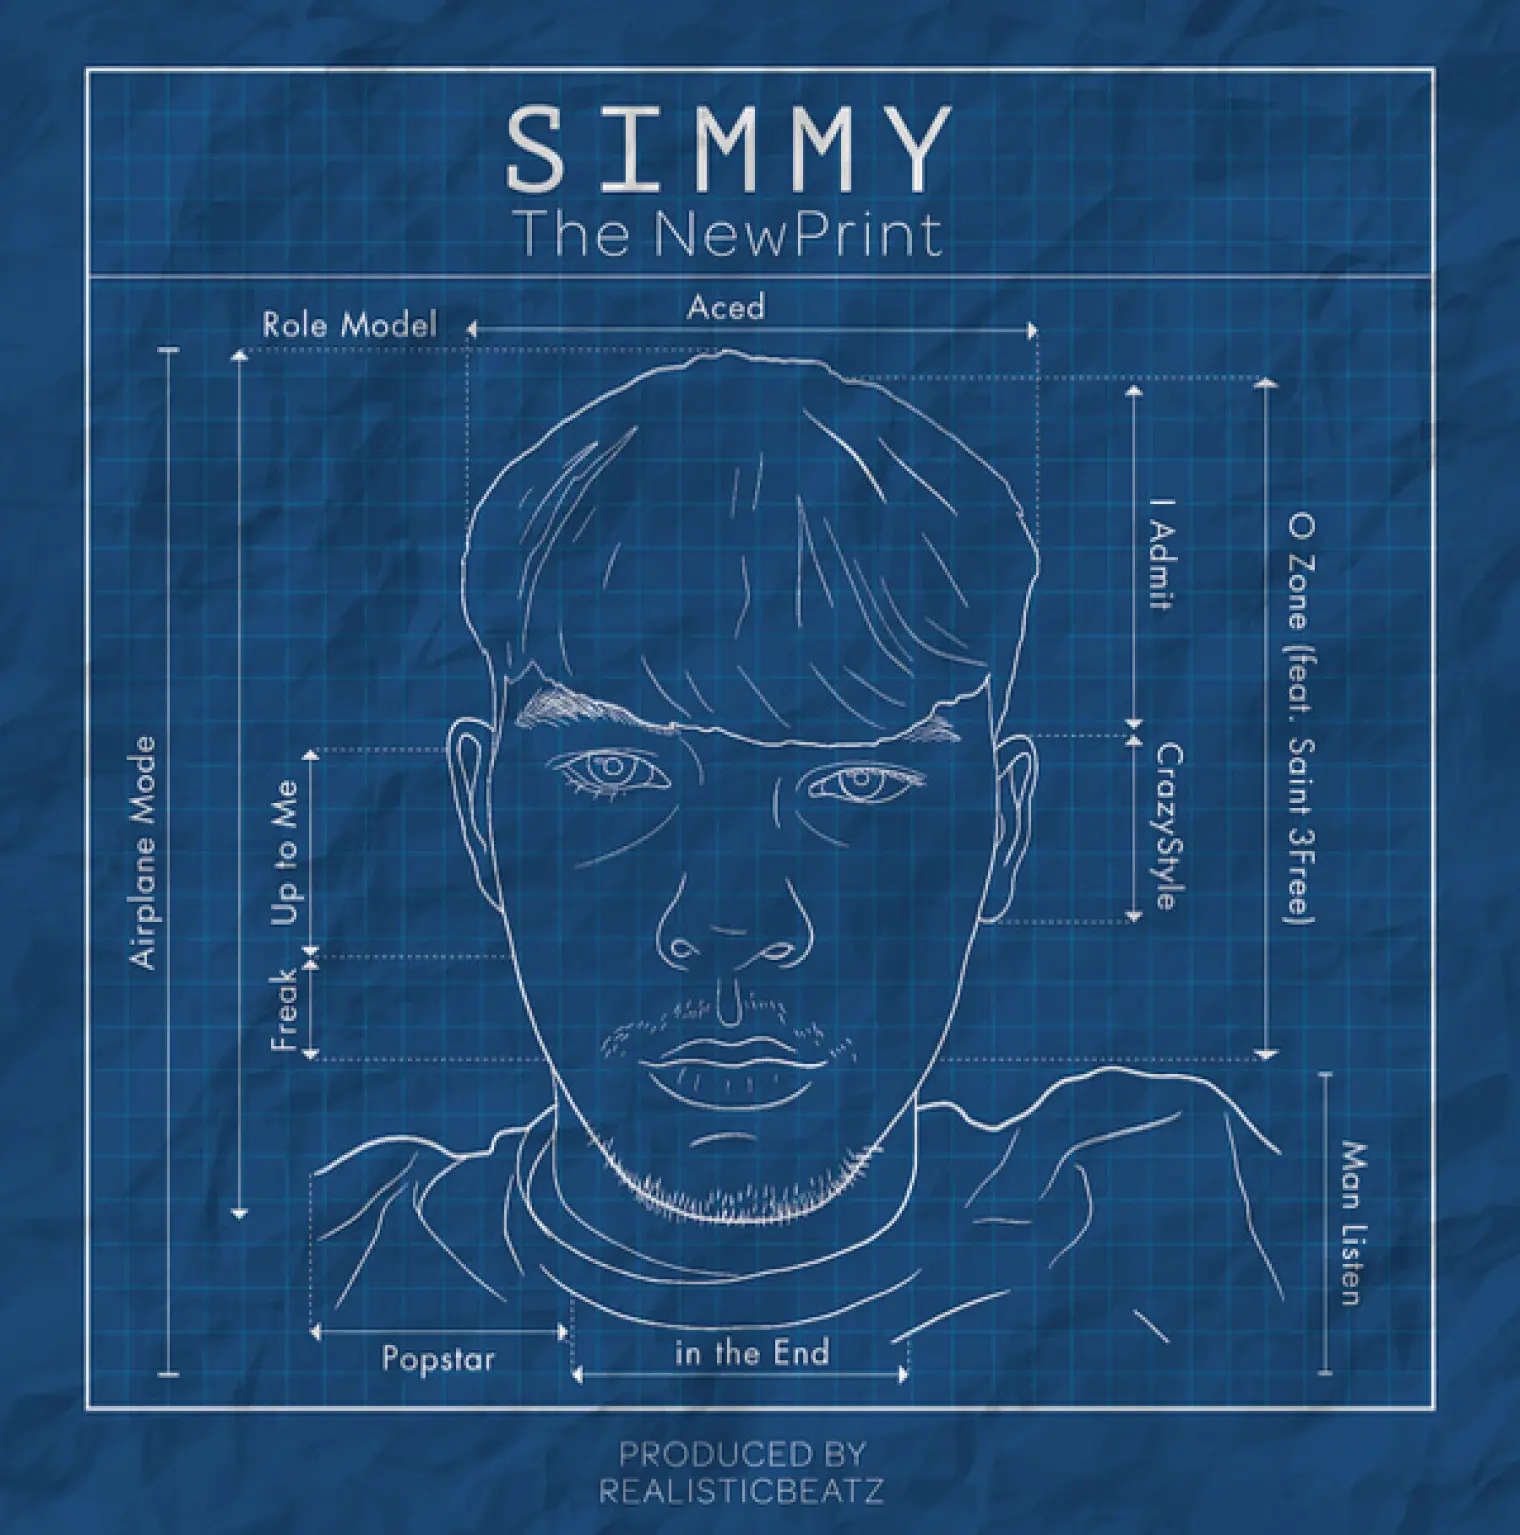 The NewPrint -  Simmy 